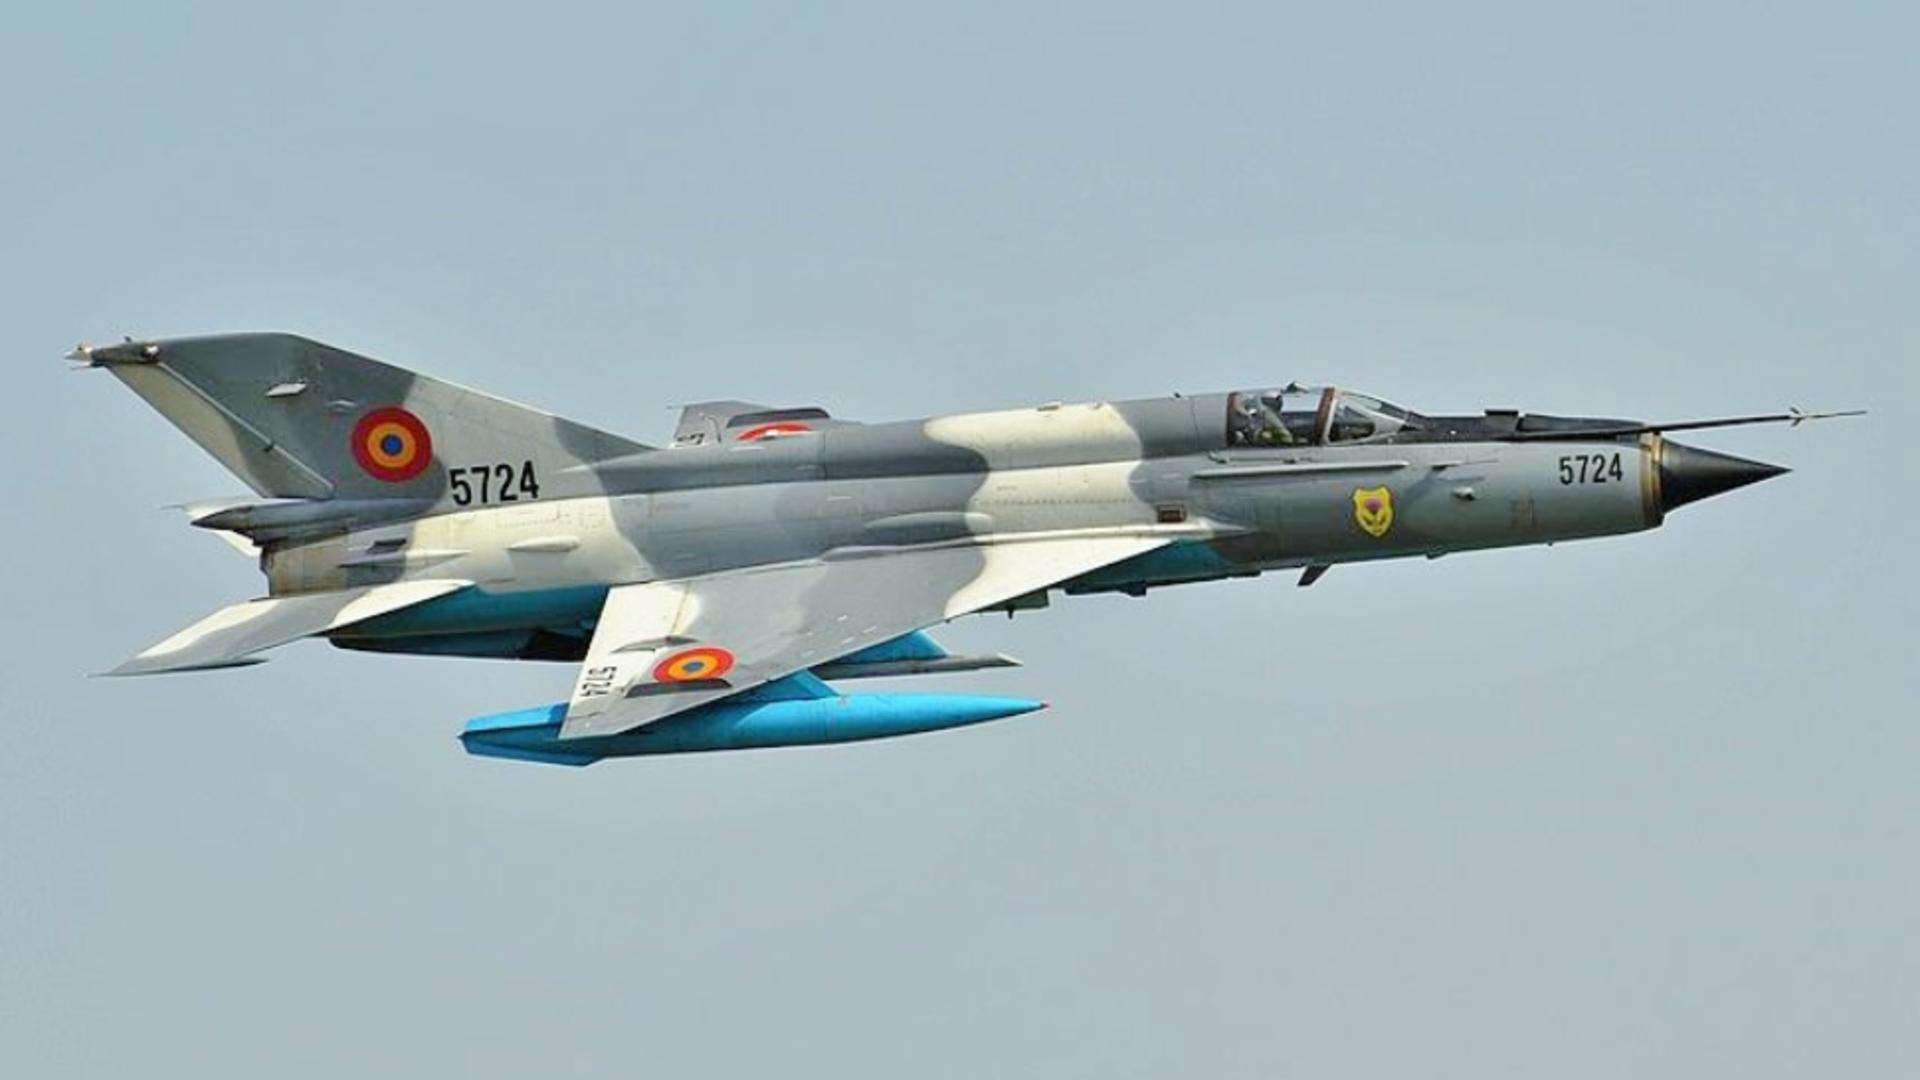 MiG-21 Lancer/ Wikipedia